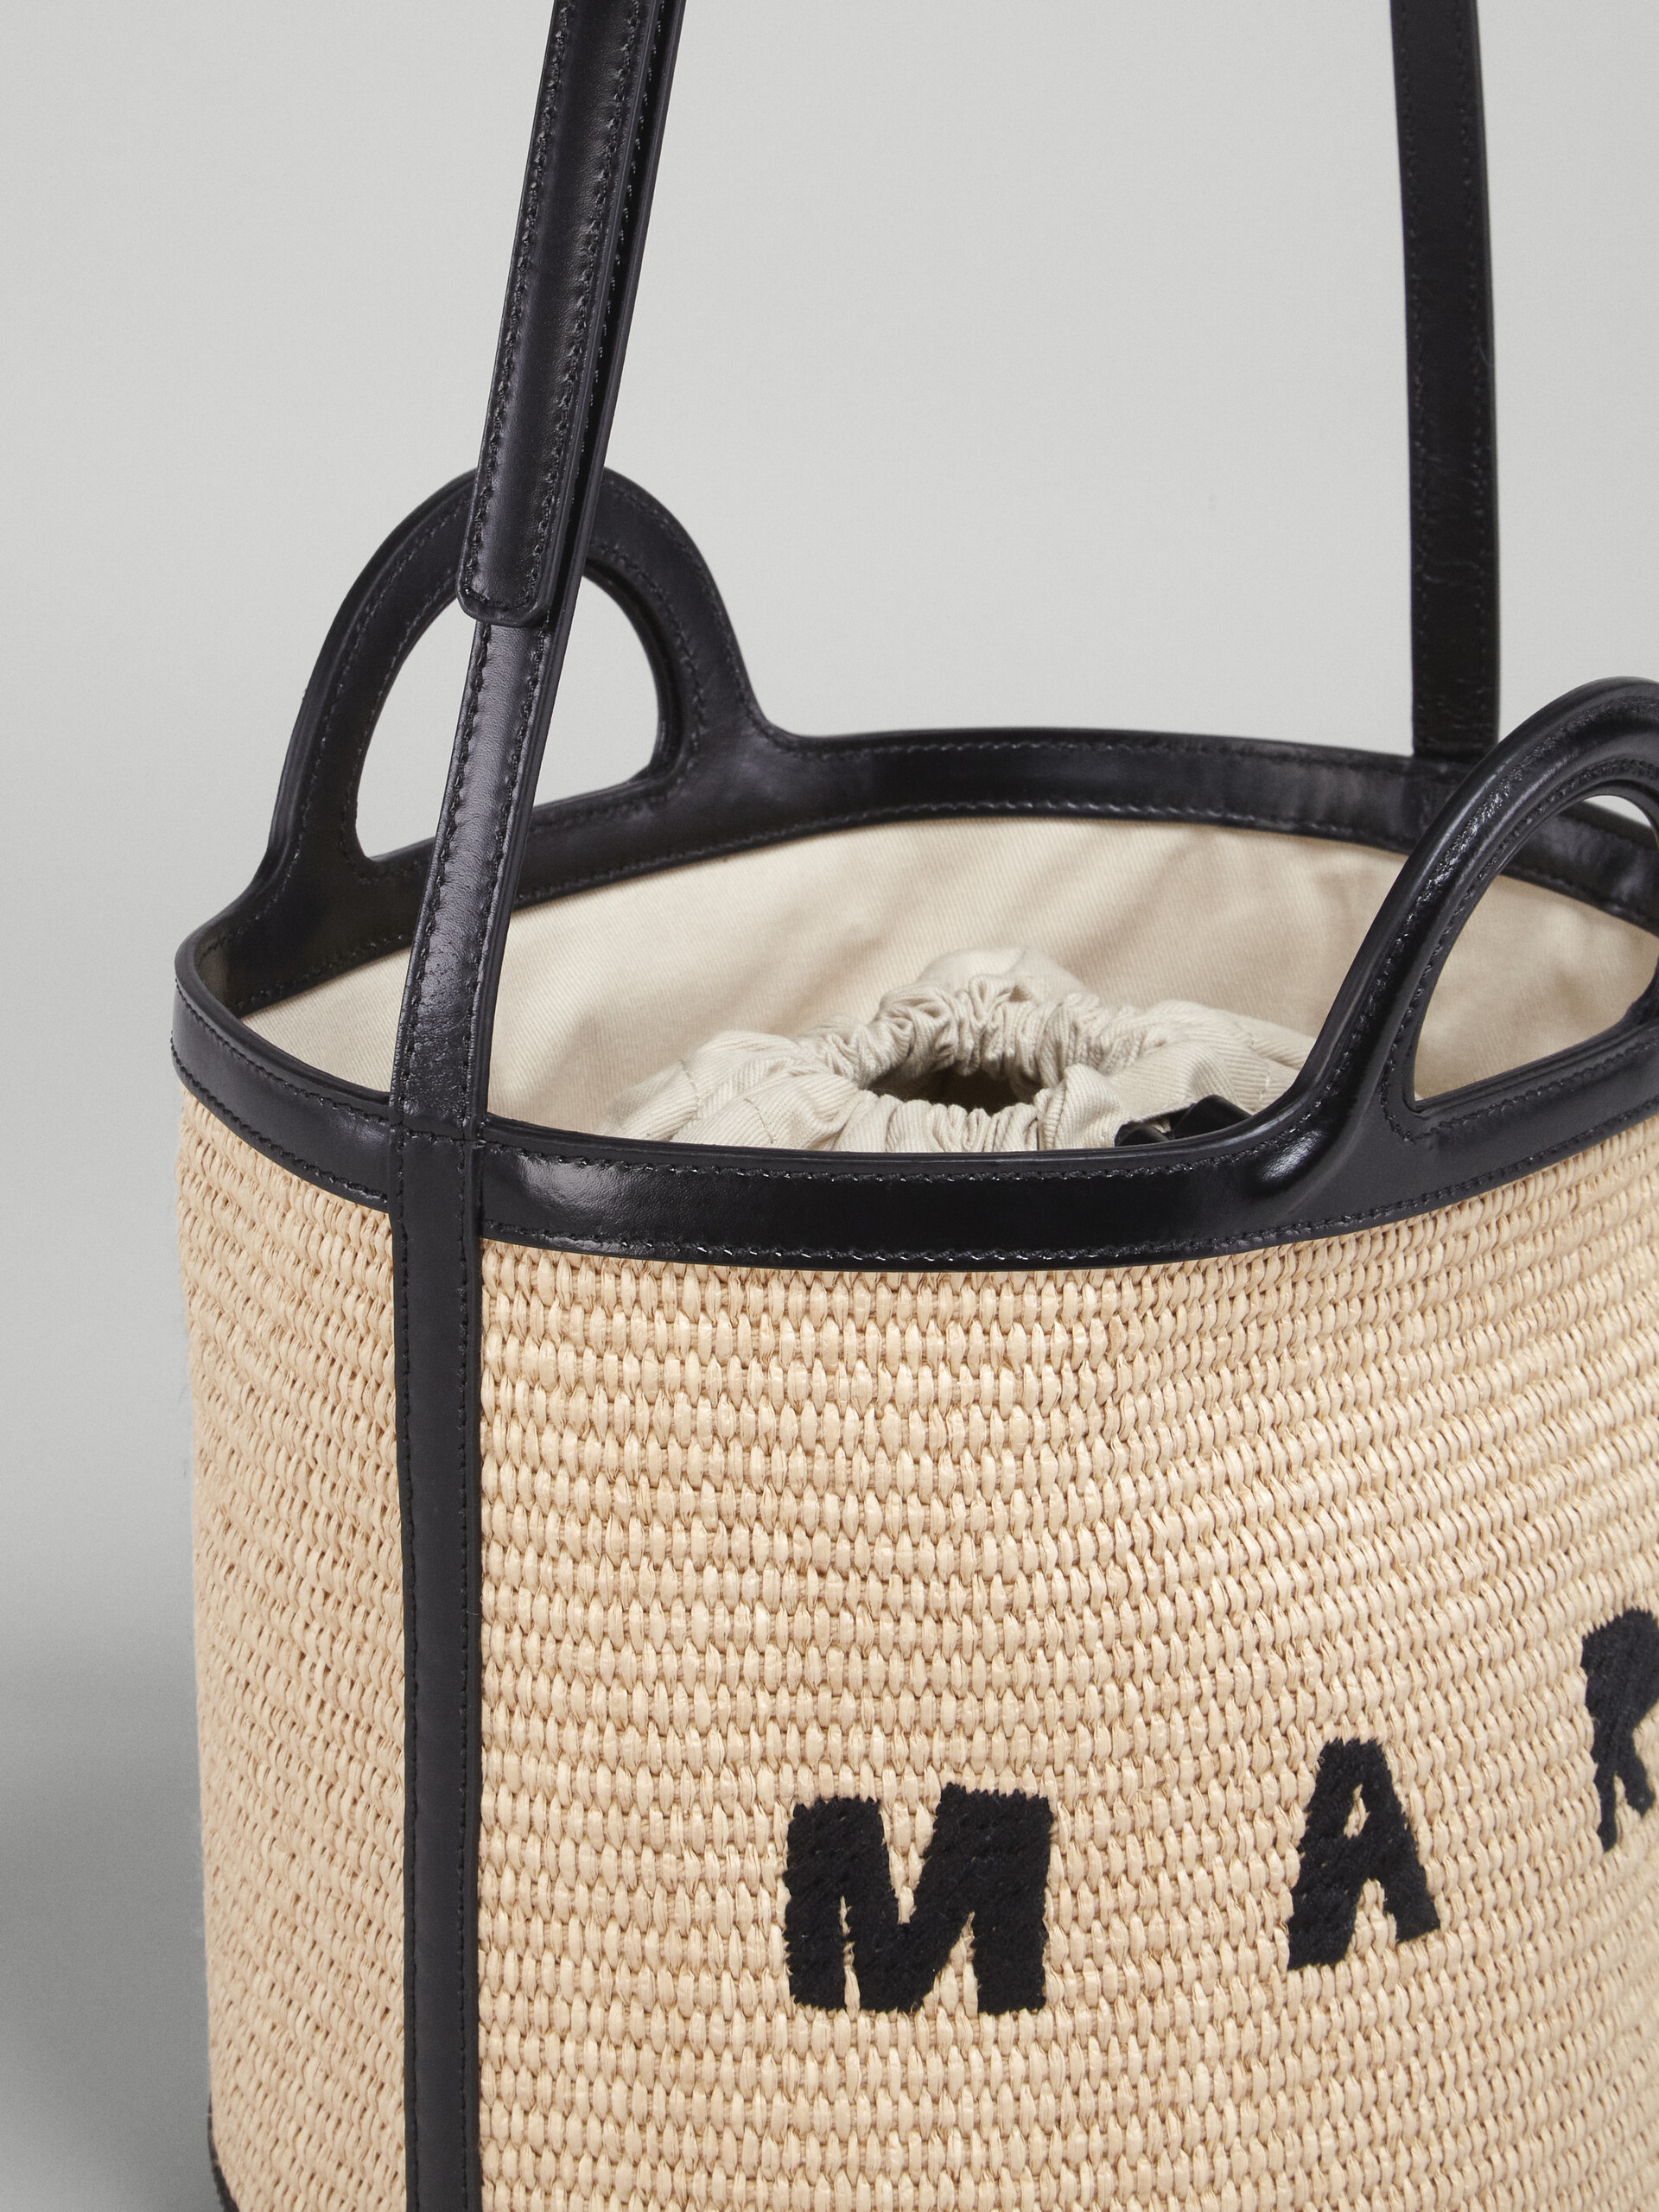 TROPICALIA small bucket bag  in black leather and raffia - Shoulder Bag - Image 4